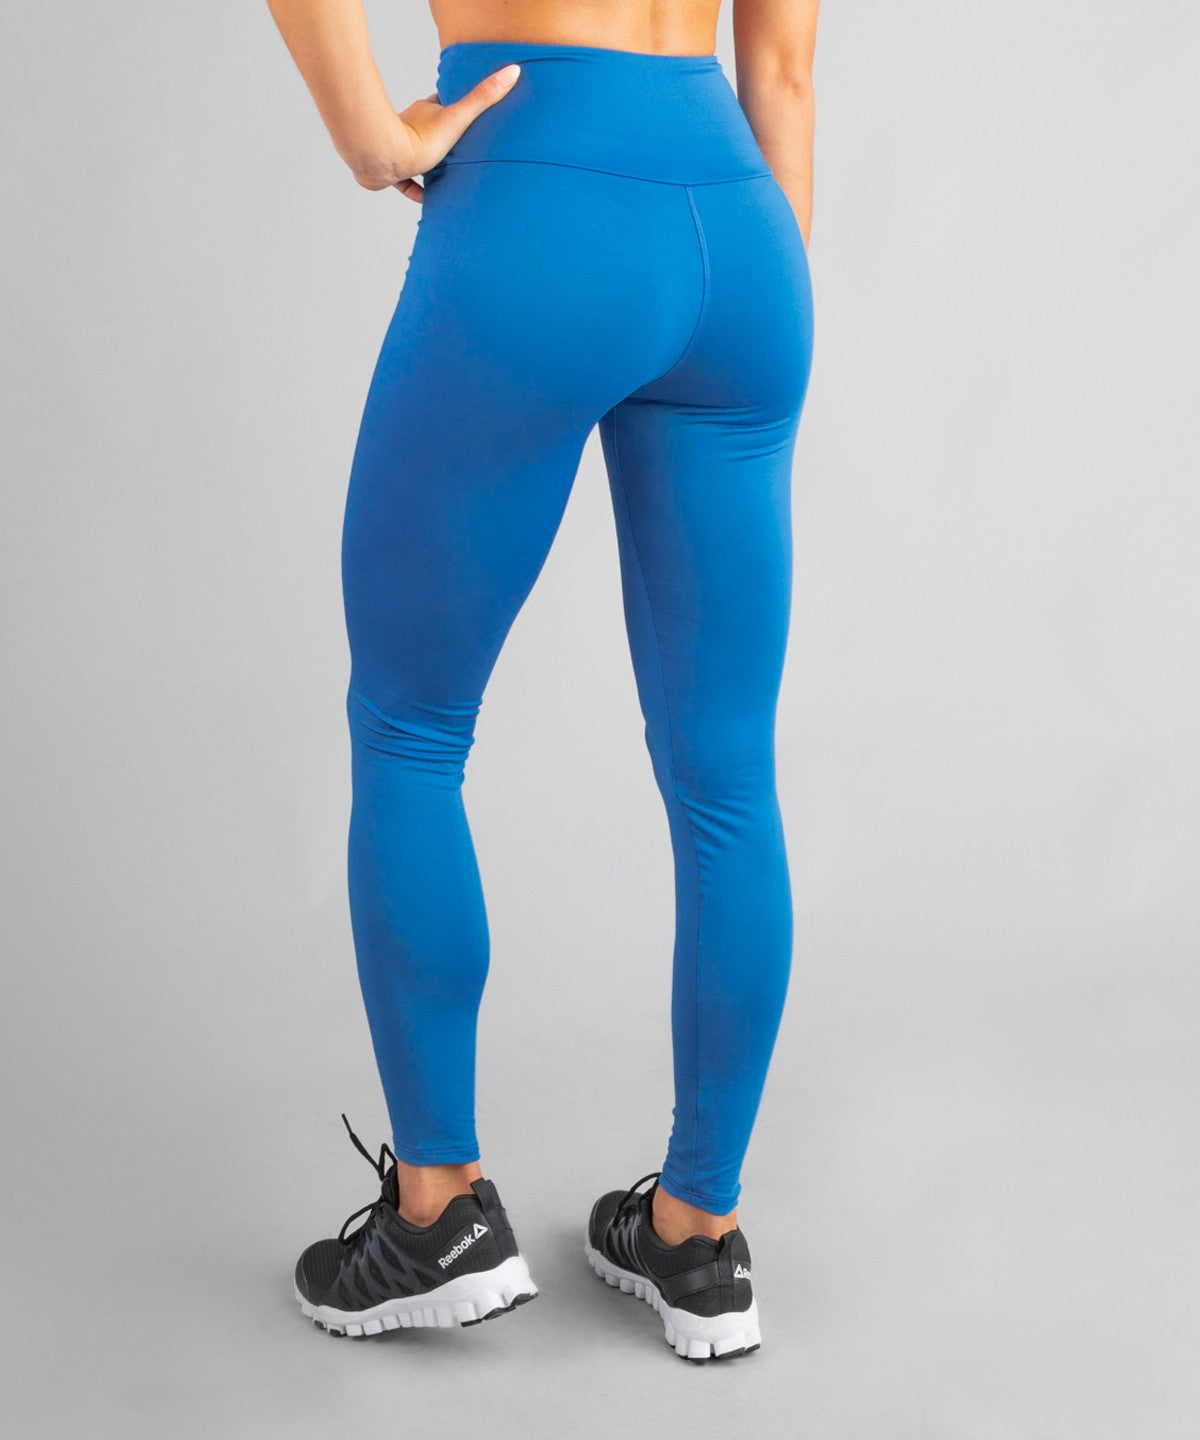 Carpatree High Waist Leggings - cobalt blue high waisted sports leggings, perfect activewear